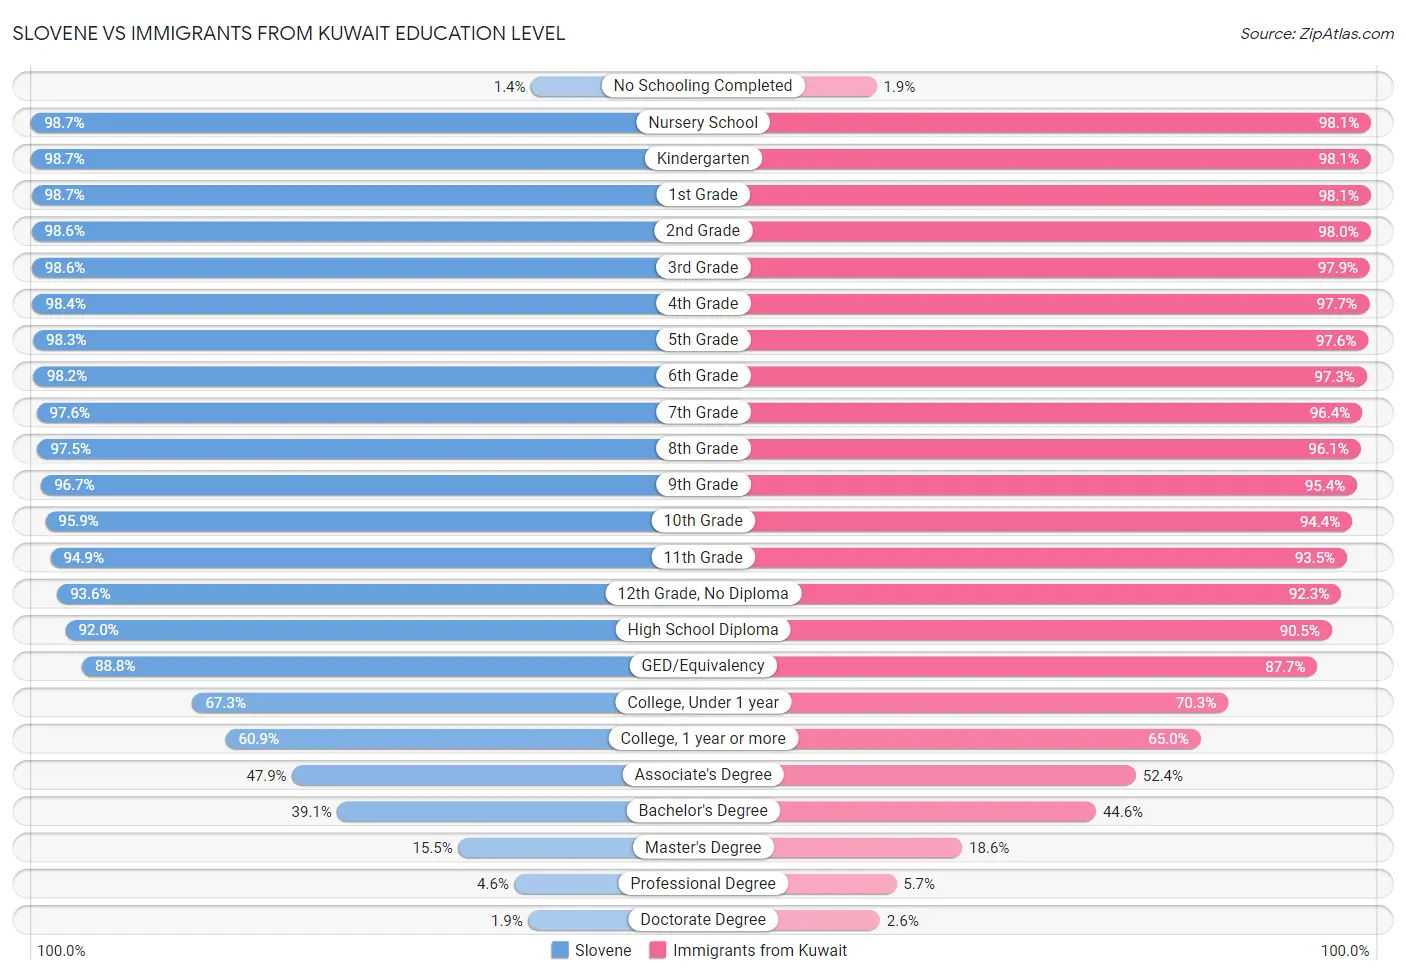 Slovene vs Immigrants from Kuwait Education Level